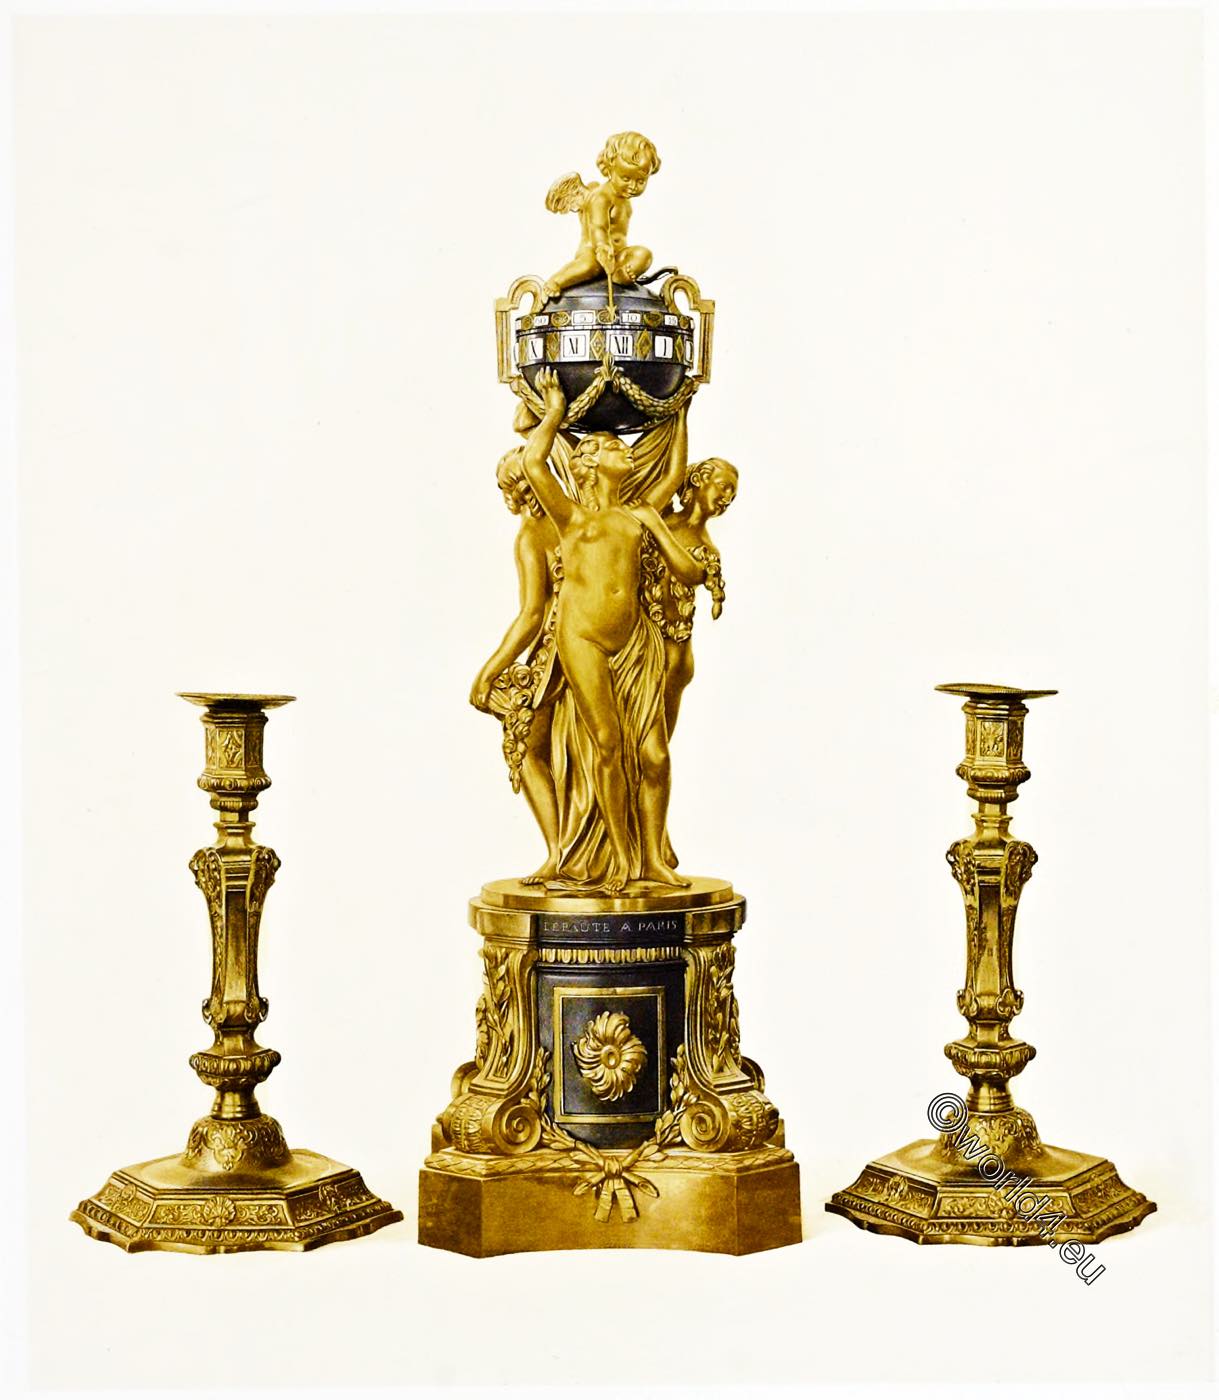 Pendulum, clock , Rococo, ean-Joseph, Saint-Germain, 